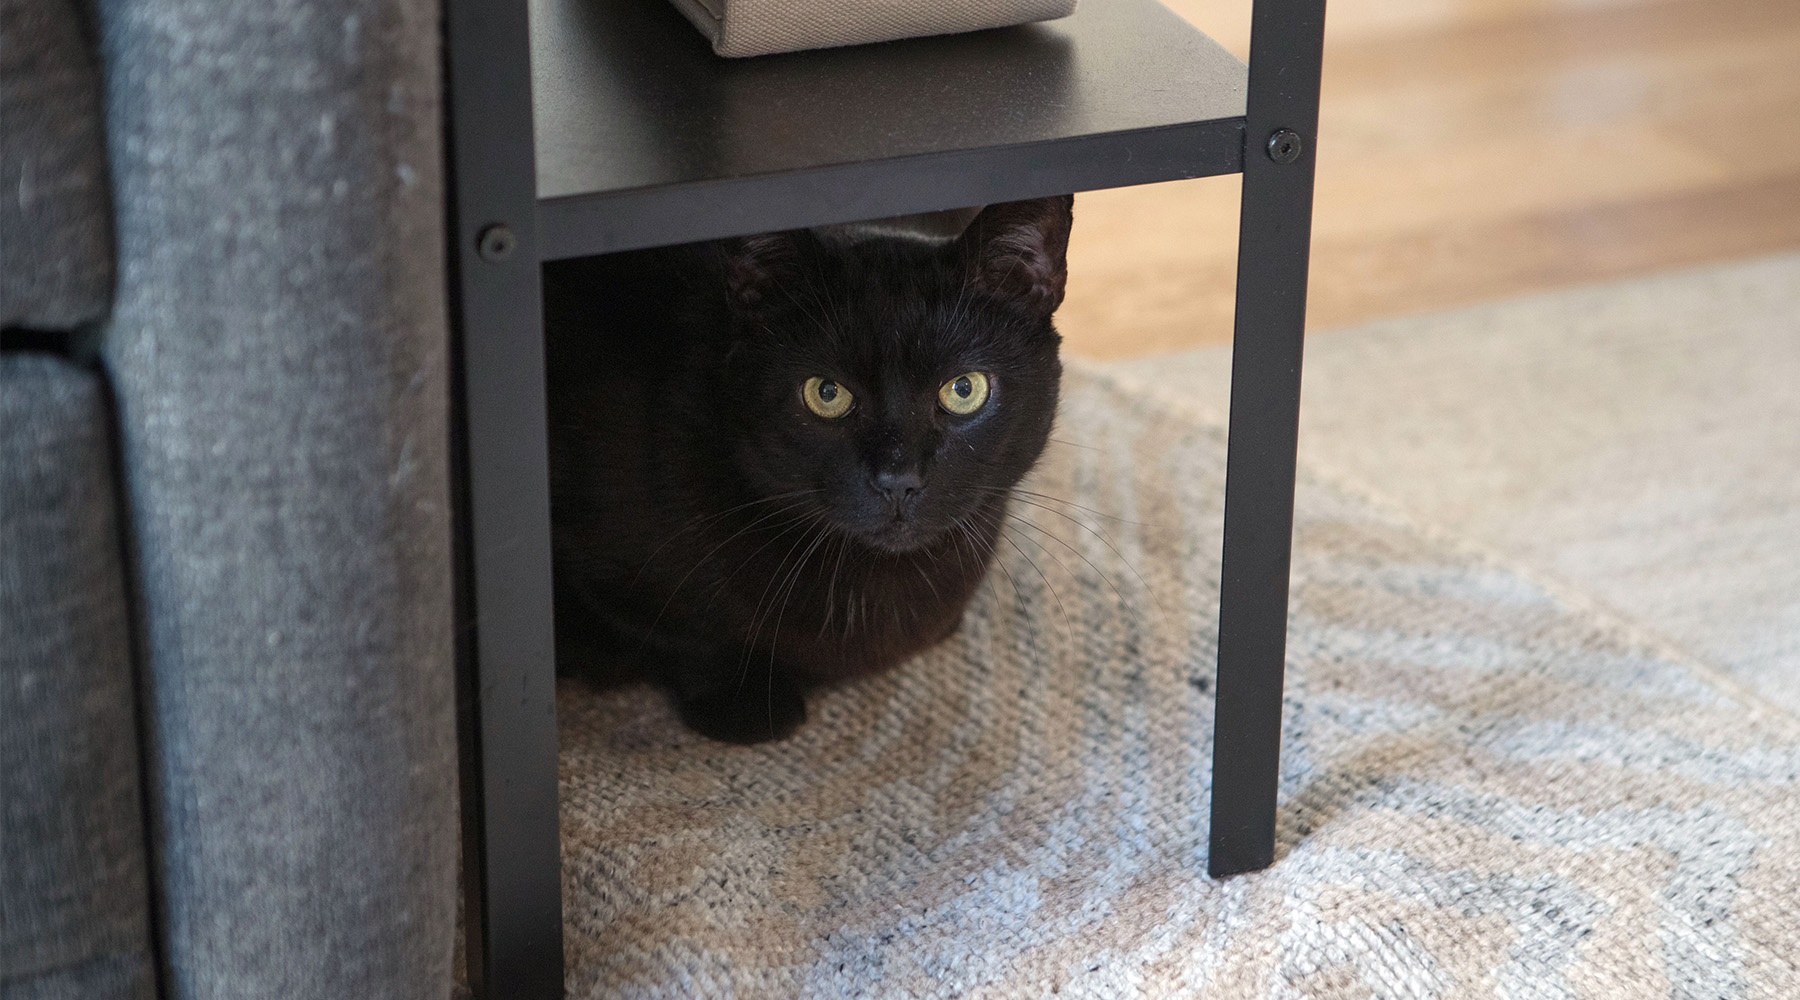 Giles the black cat finds a hiding spot near the sofa